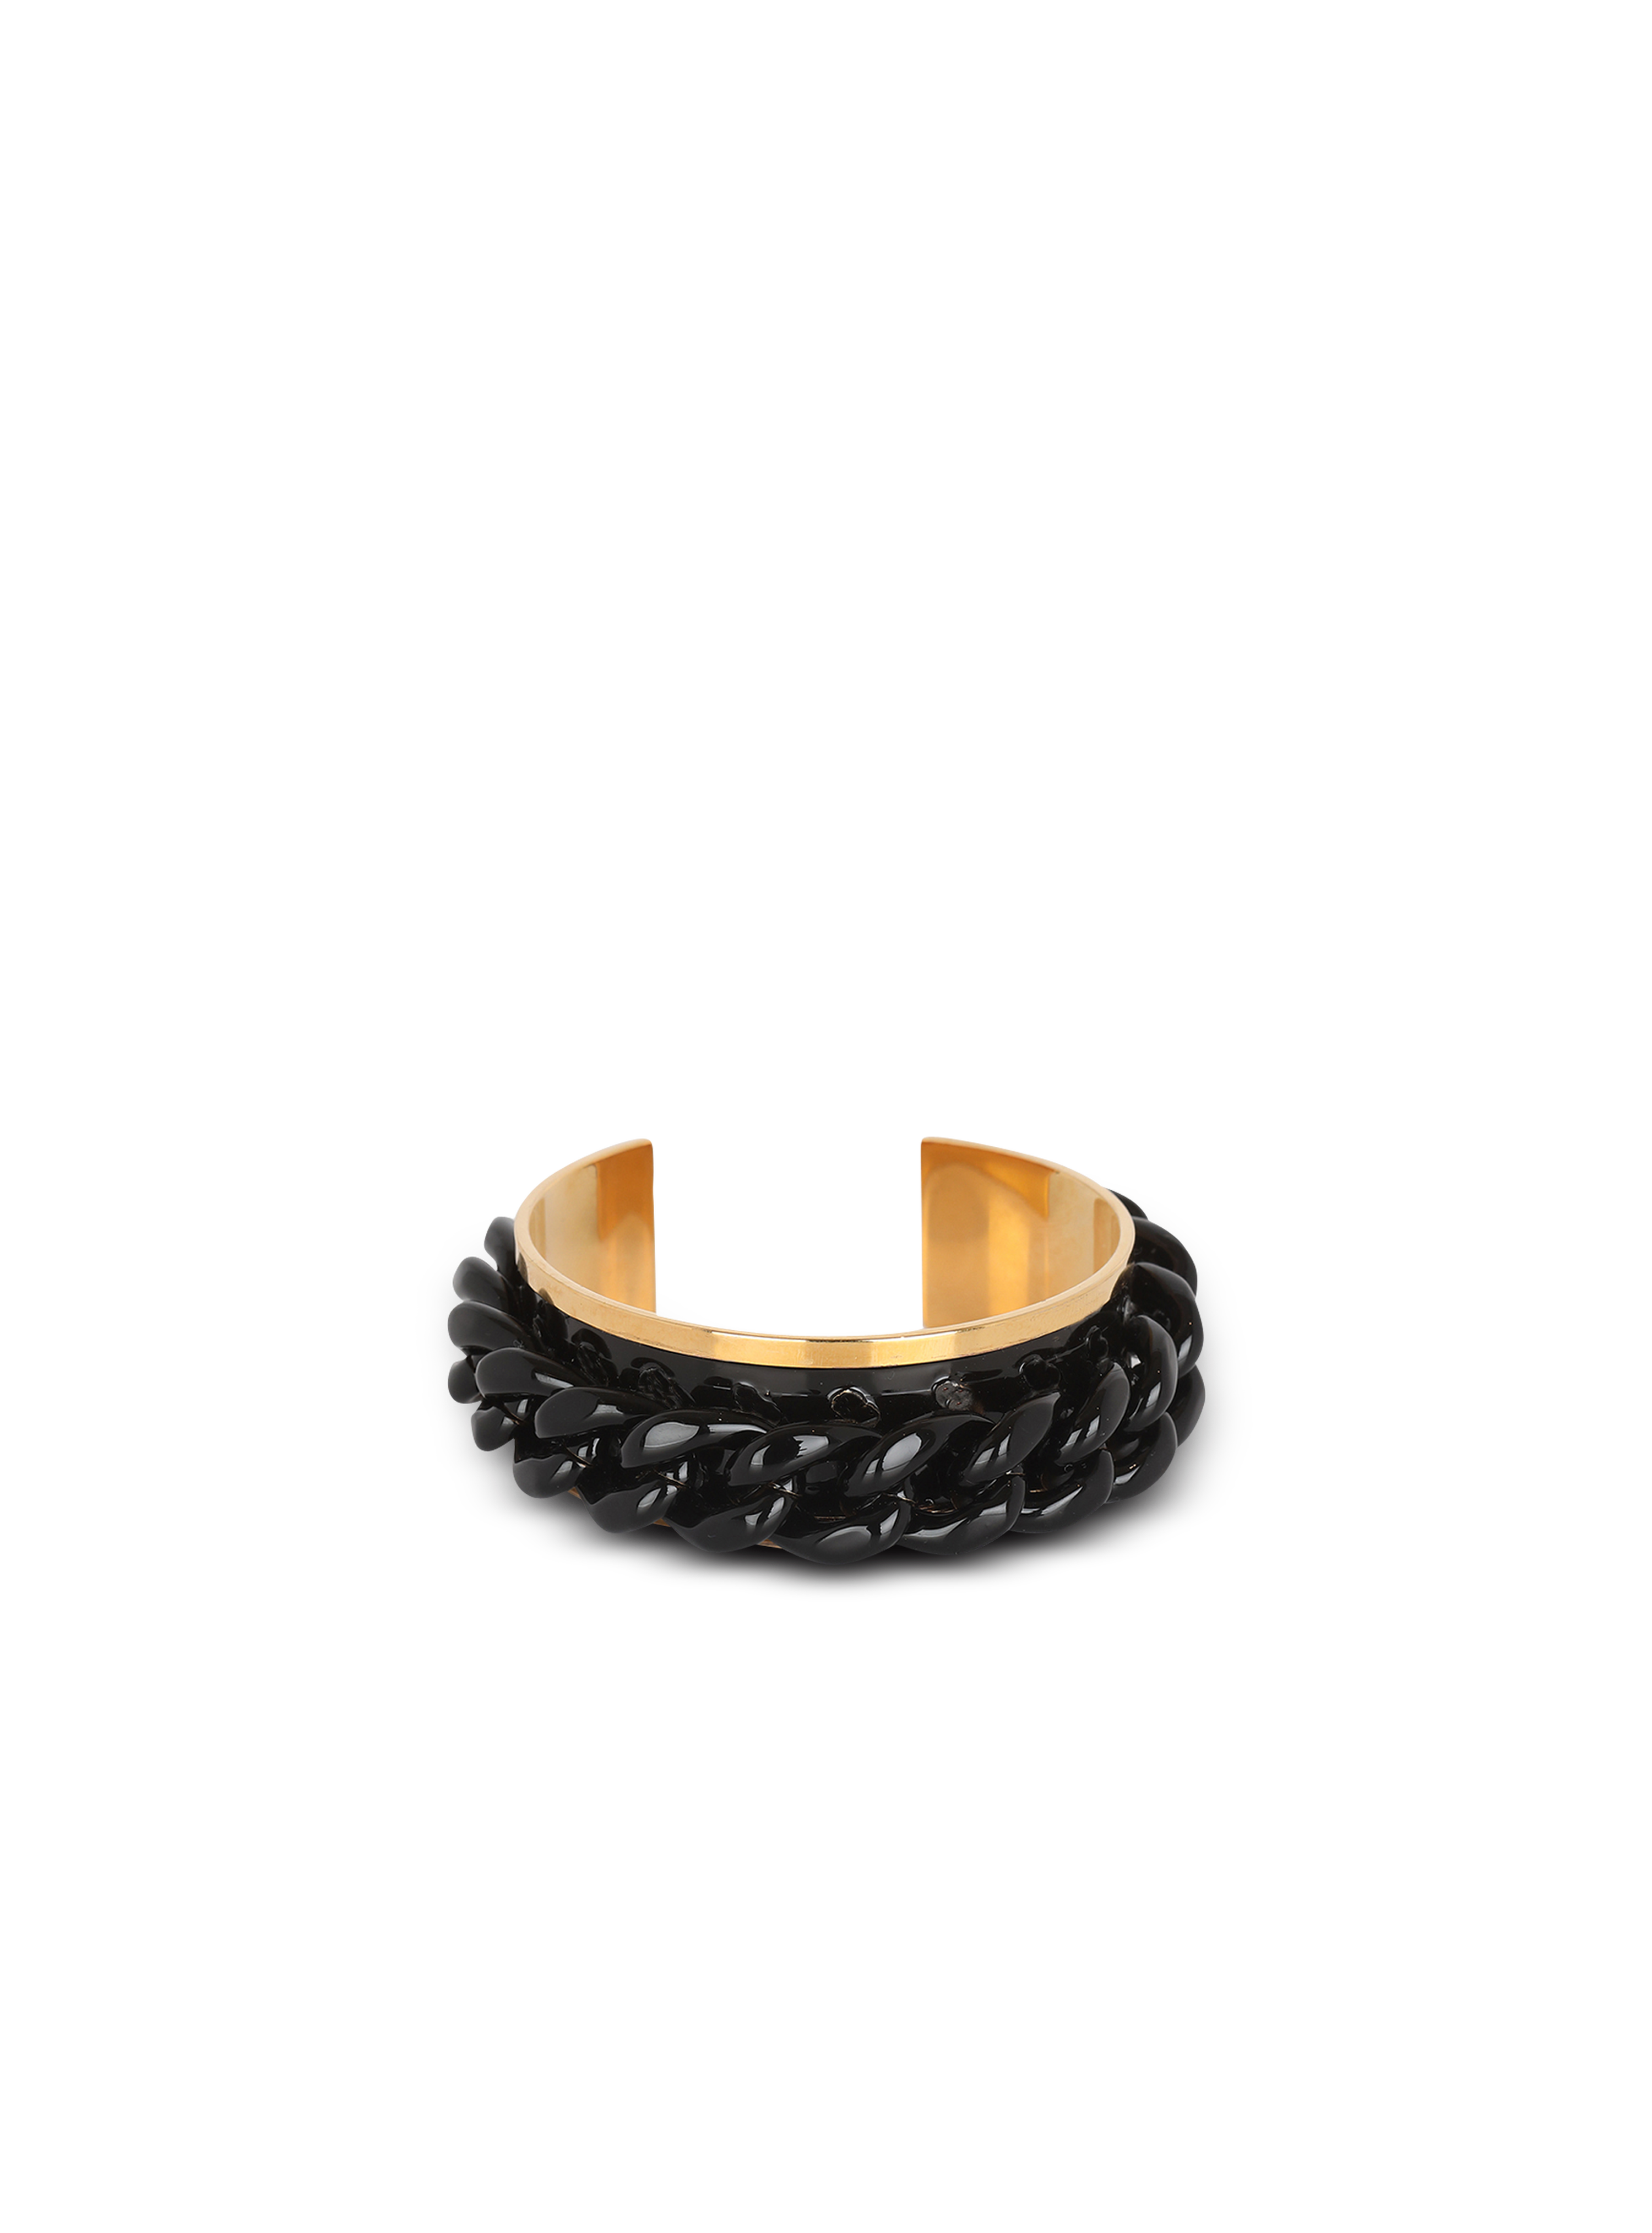 Brass chain cuff bracelet, black